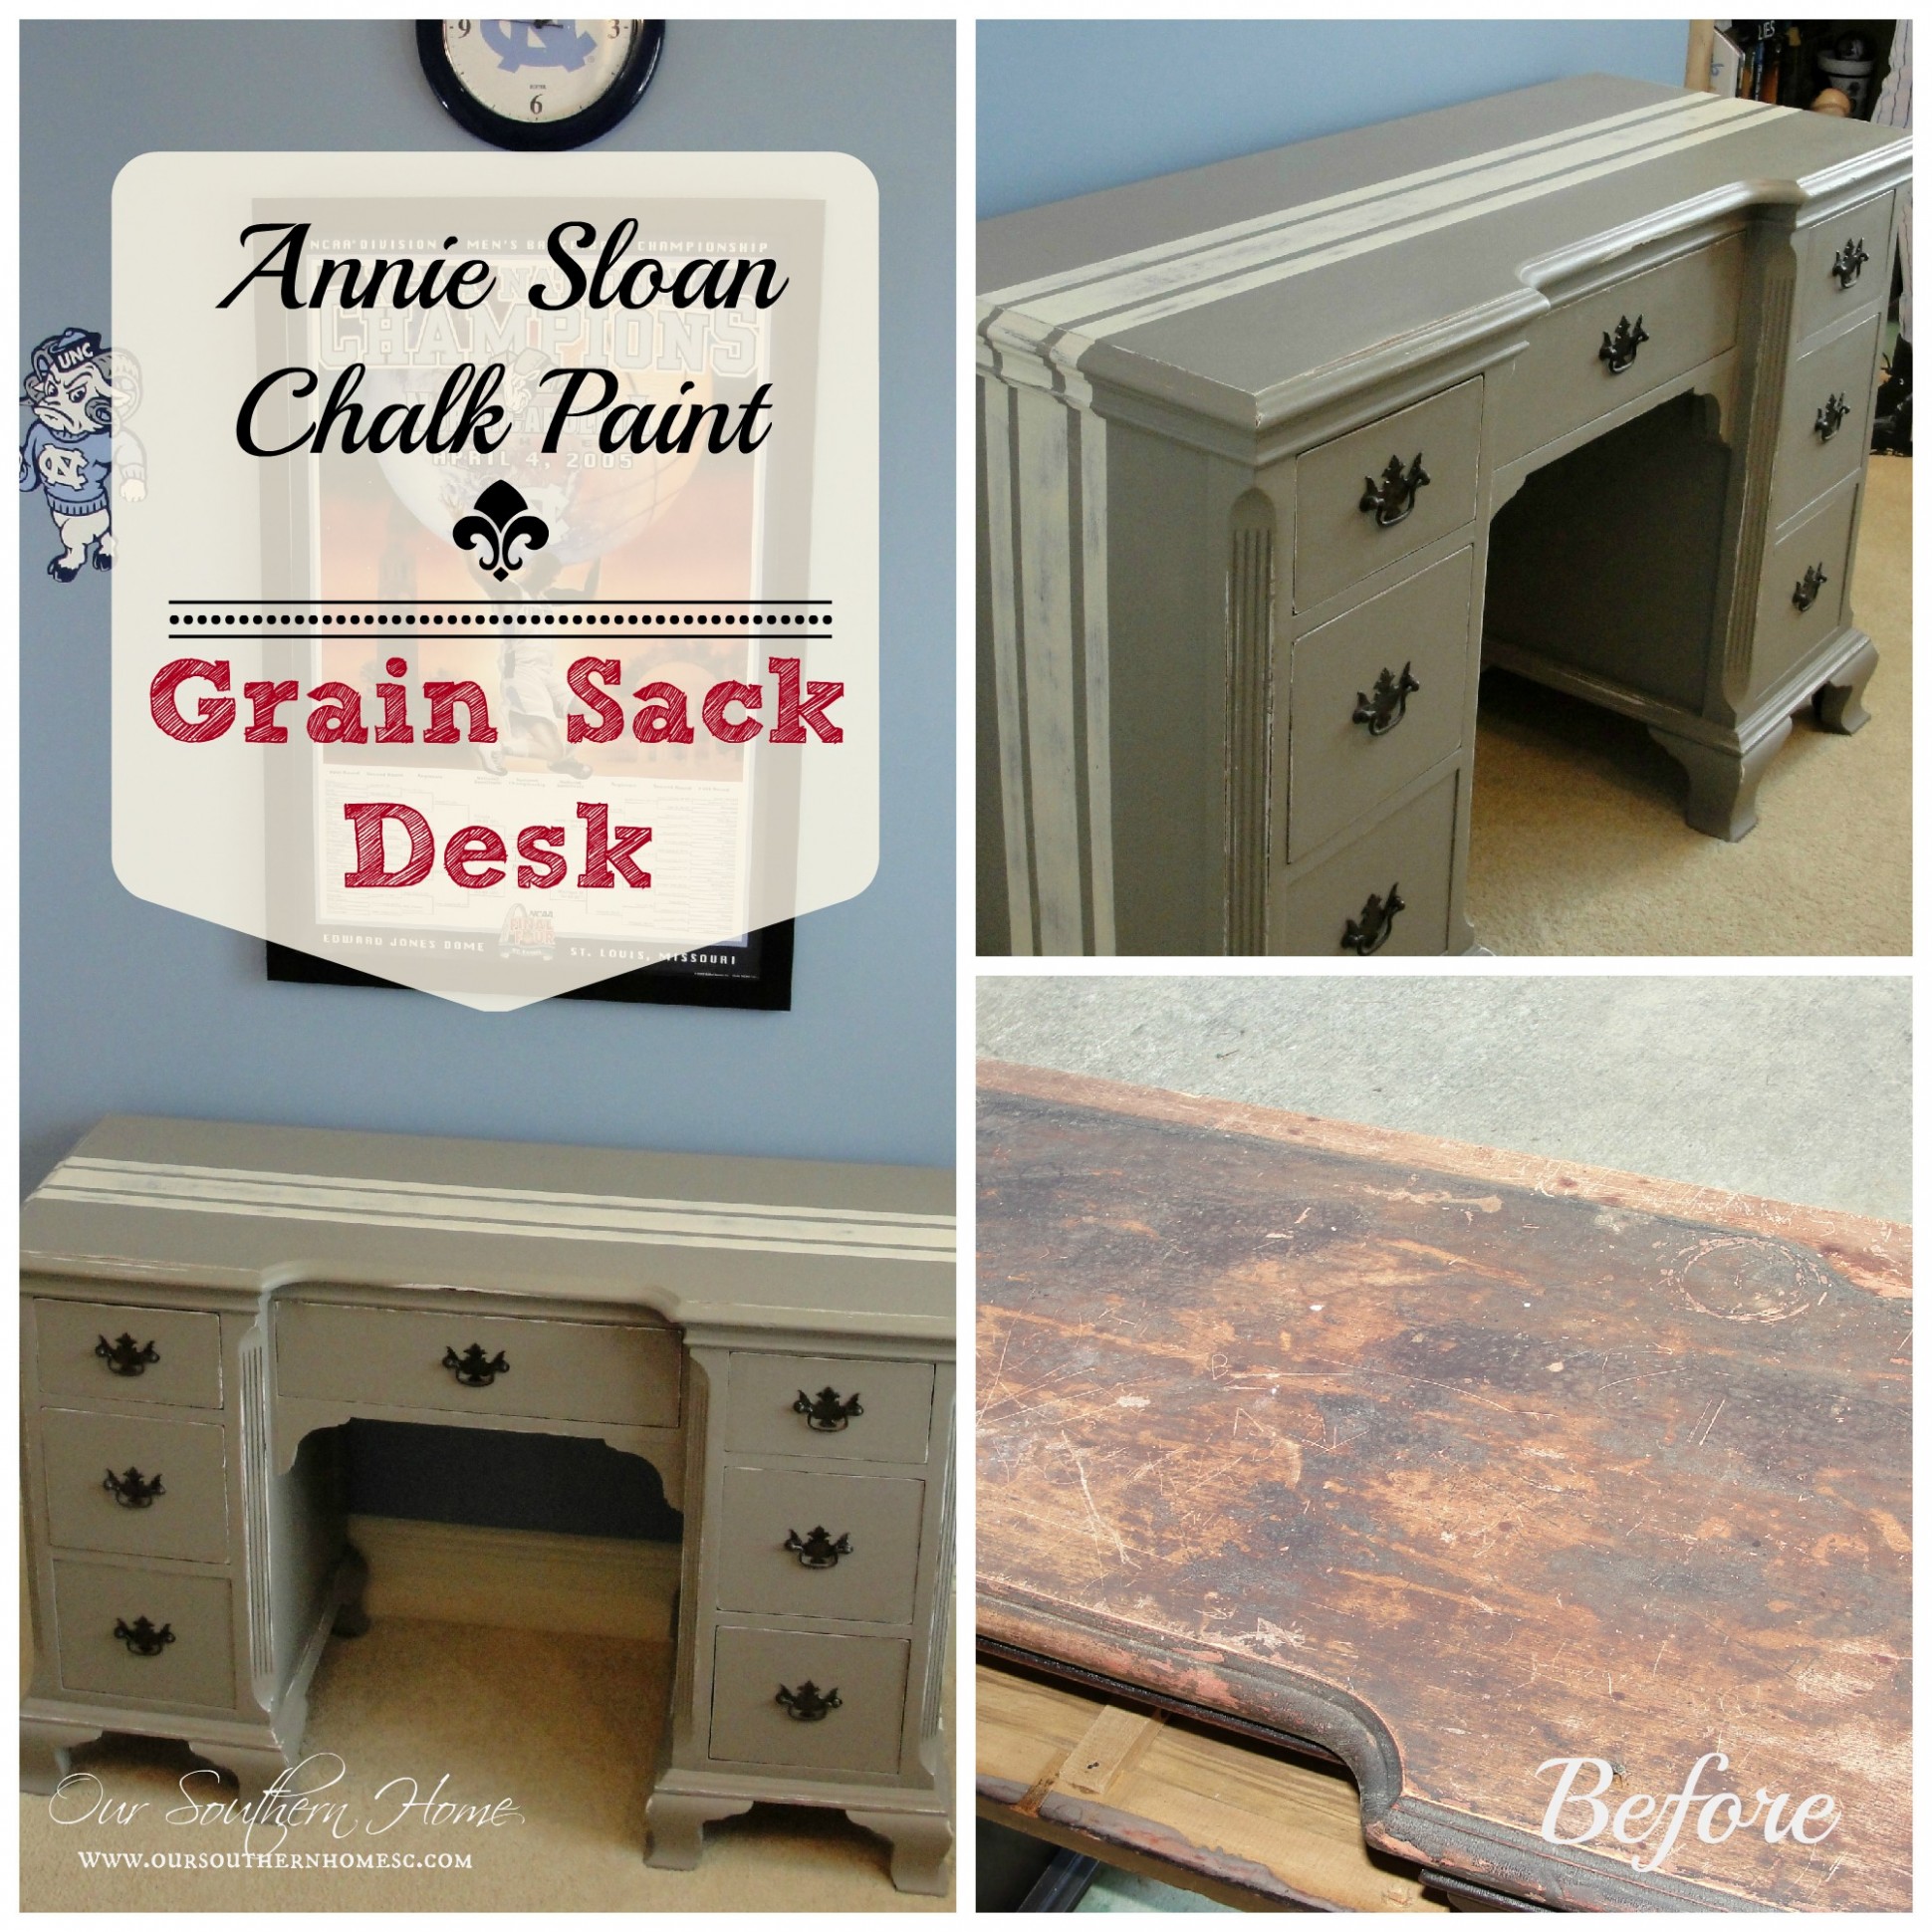 Grain Sack Desk Annie Sloan Chalk Paint Our Southern Home Where Can I Buy Annie Sloan Chalk Paint Online